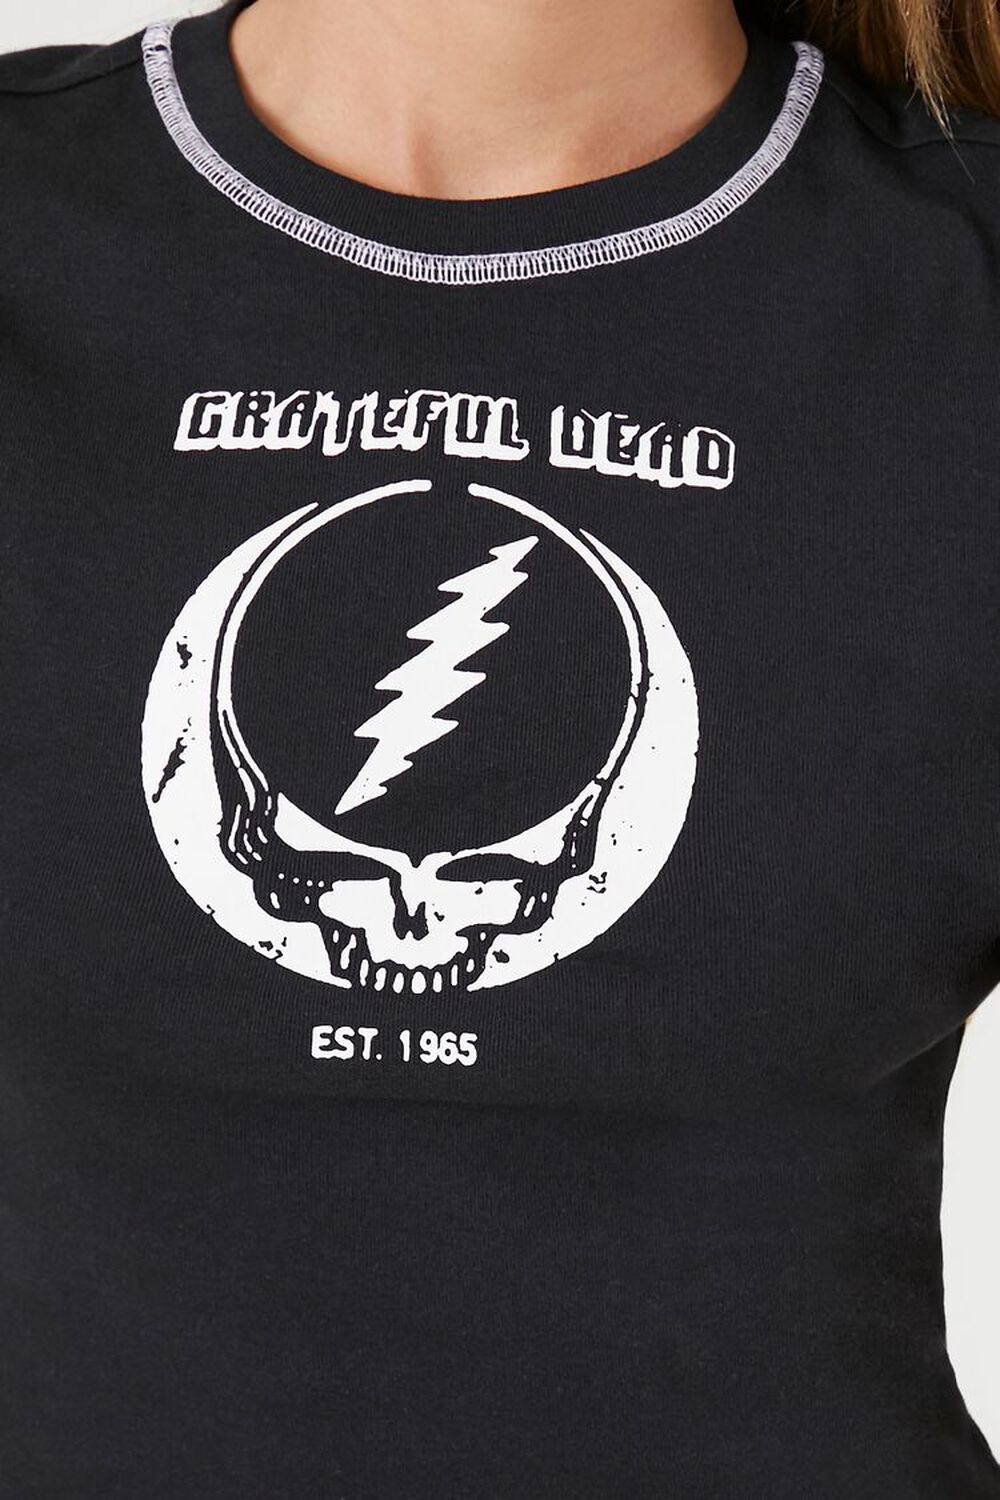 The Grateful Dead Graphic T-Shirt - White